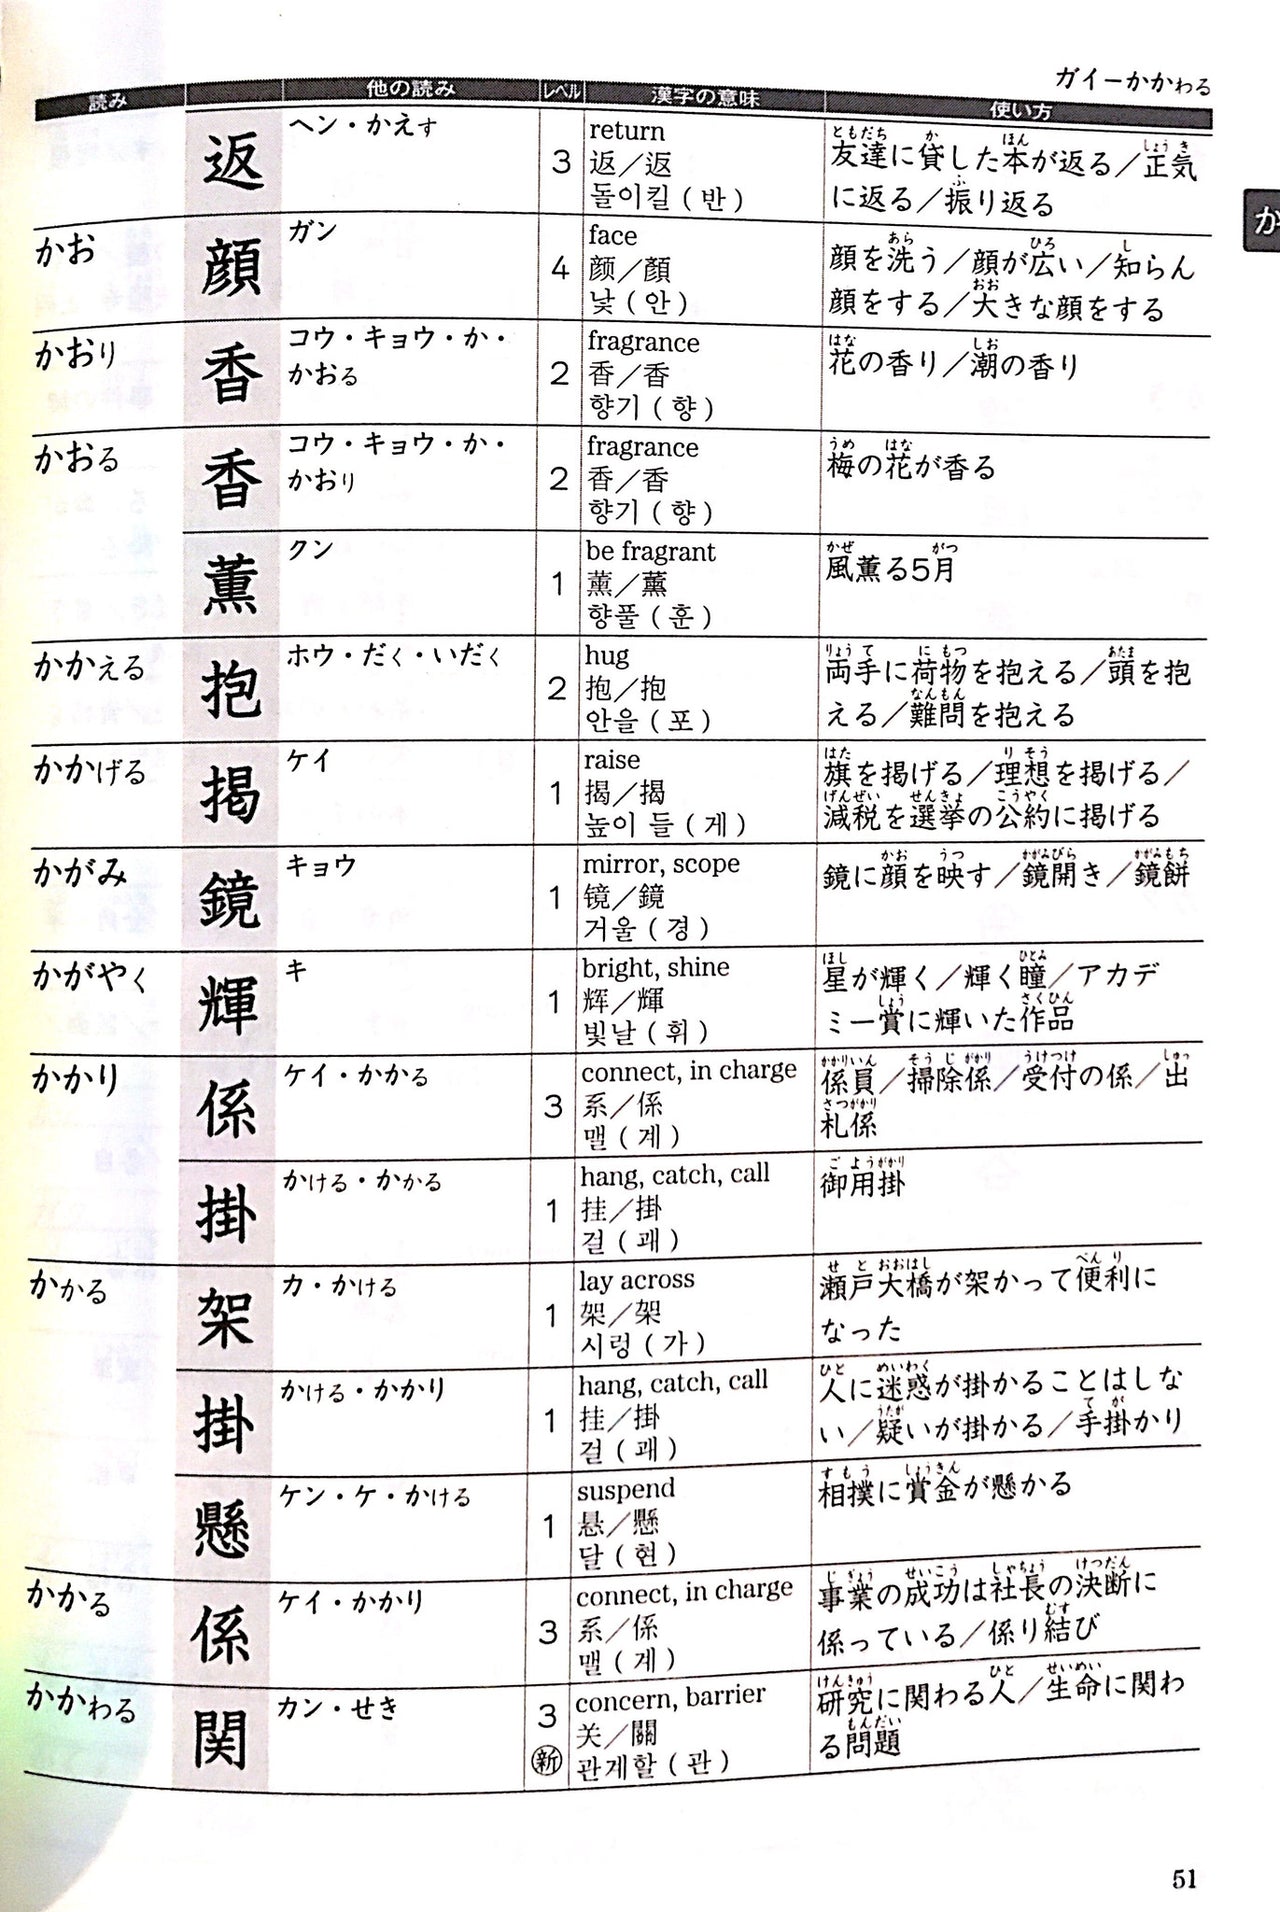 Kanji Handbook for the Japanese Language Proficiency Test (Revised Edition) - The Japan Shop